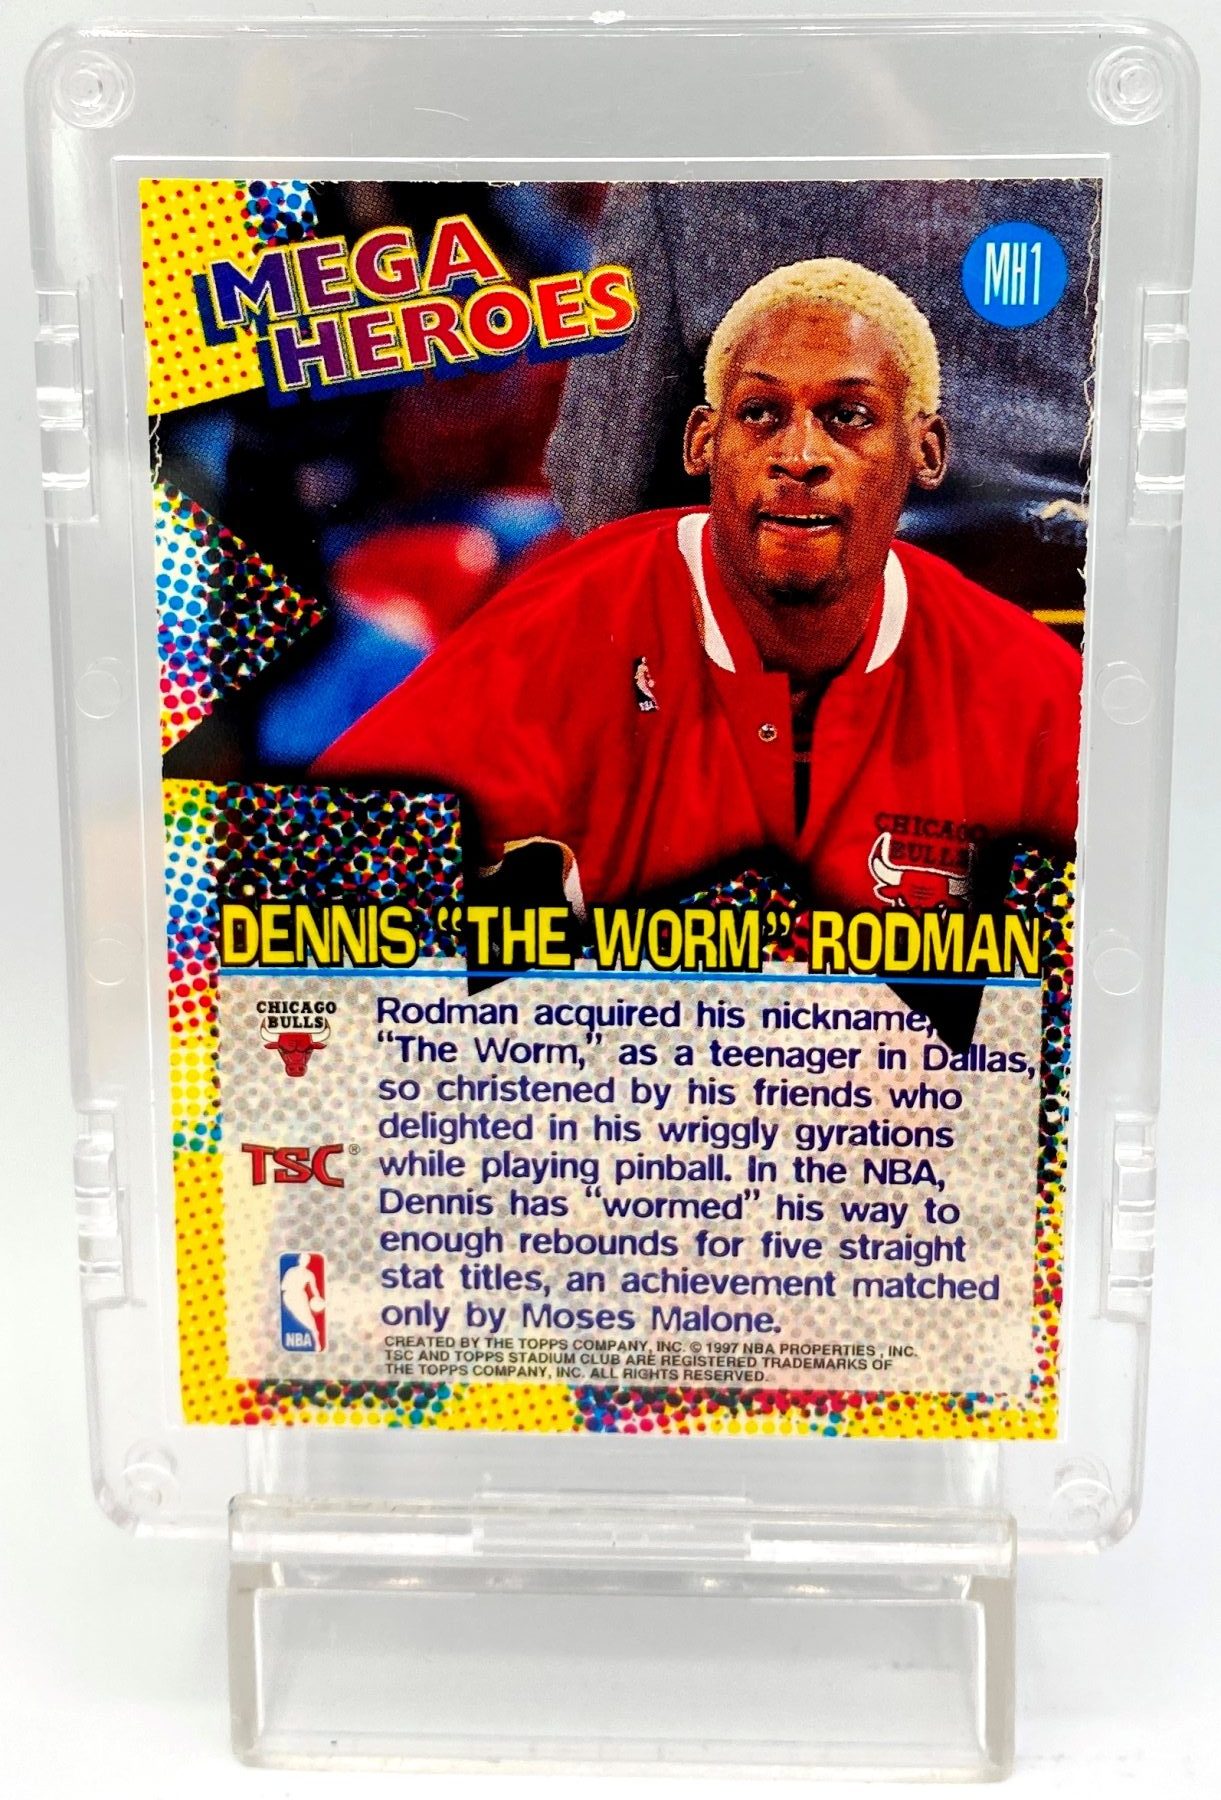 1997 Topps Stadium Club Mega Heroes Collection Dennis Rodman (THE WORM) Bulls Chrome Card #MH1) (1pc) (5)